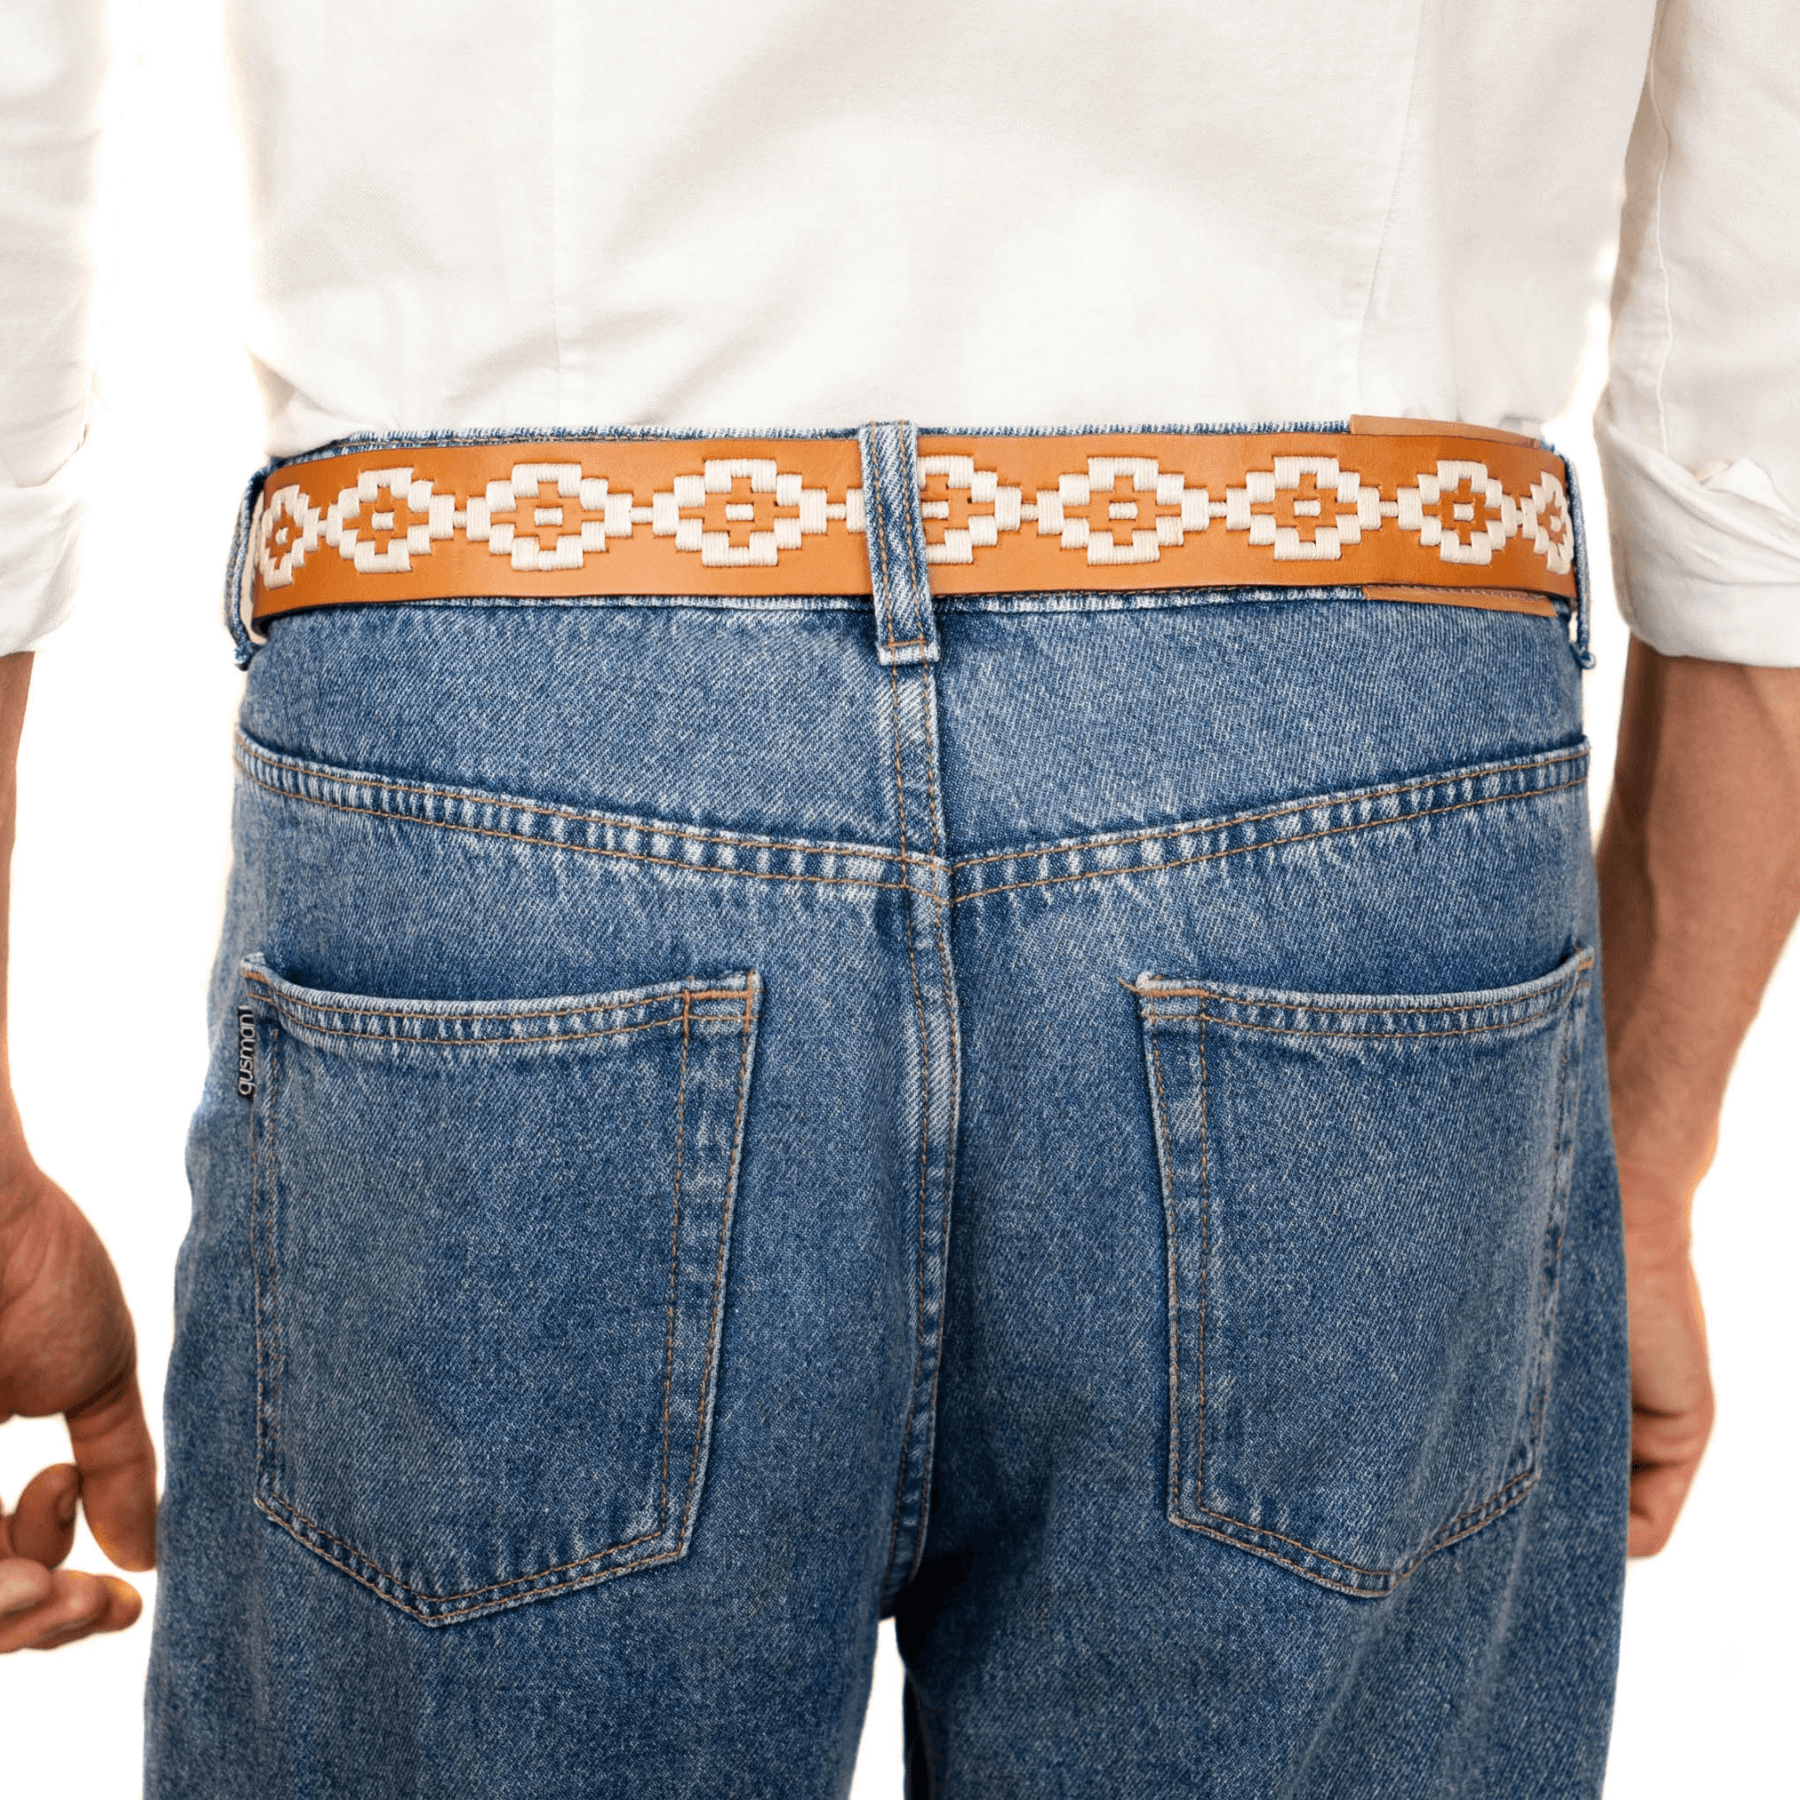 Gaucholife Belts Embroidered Belt (Tan/White)